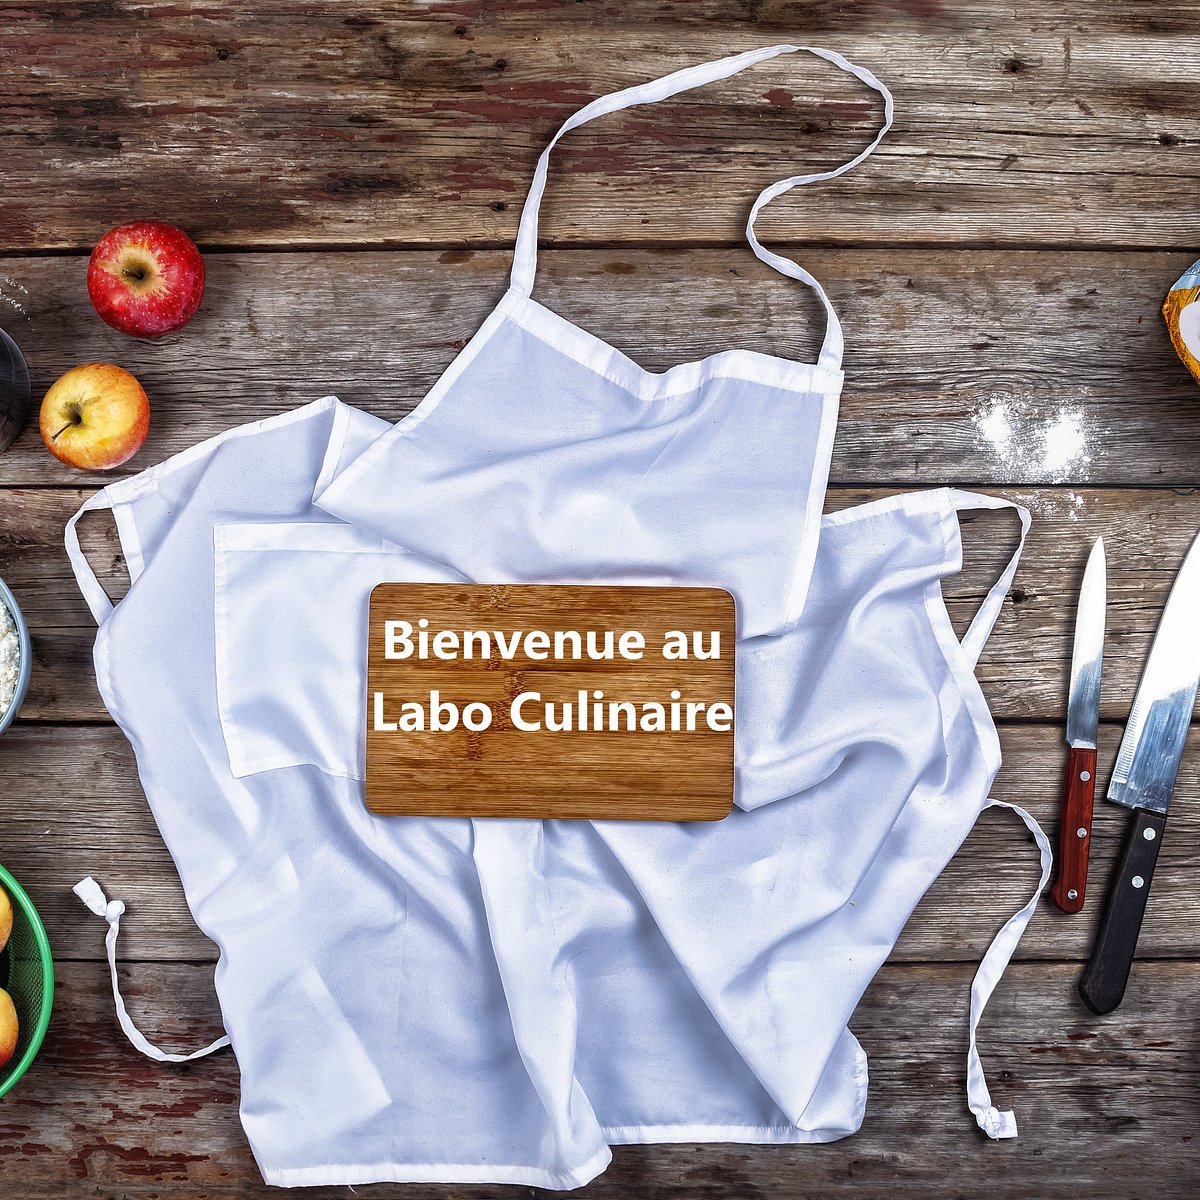 L'azote liquide - Photo de Le Labo Culinaire, Paris - Tripadvisor